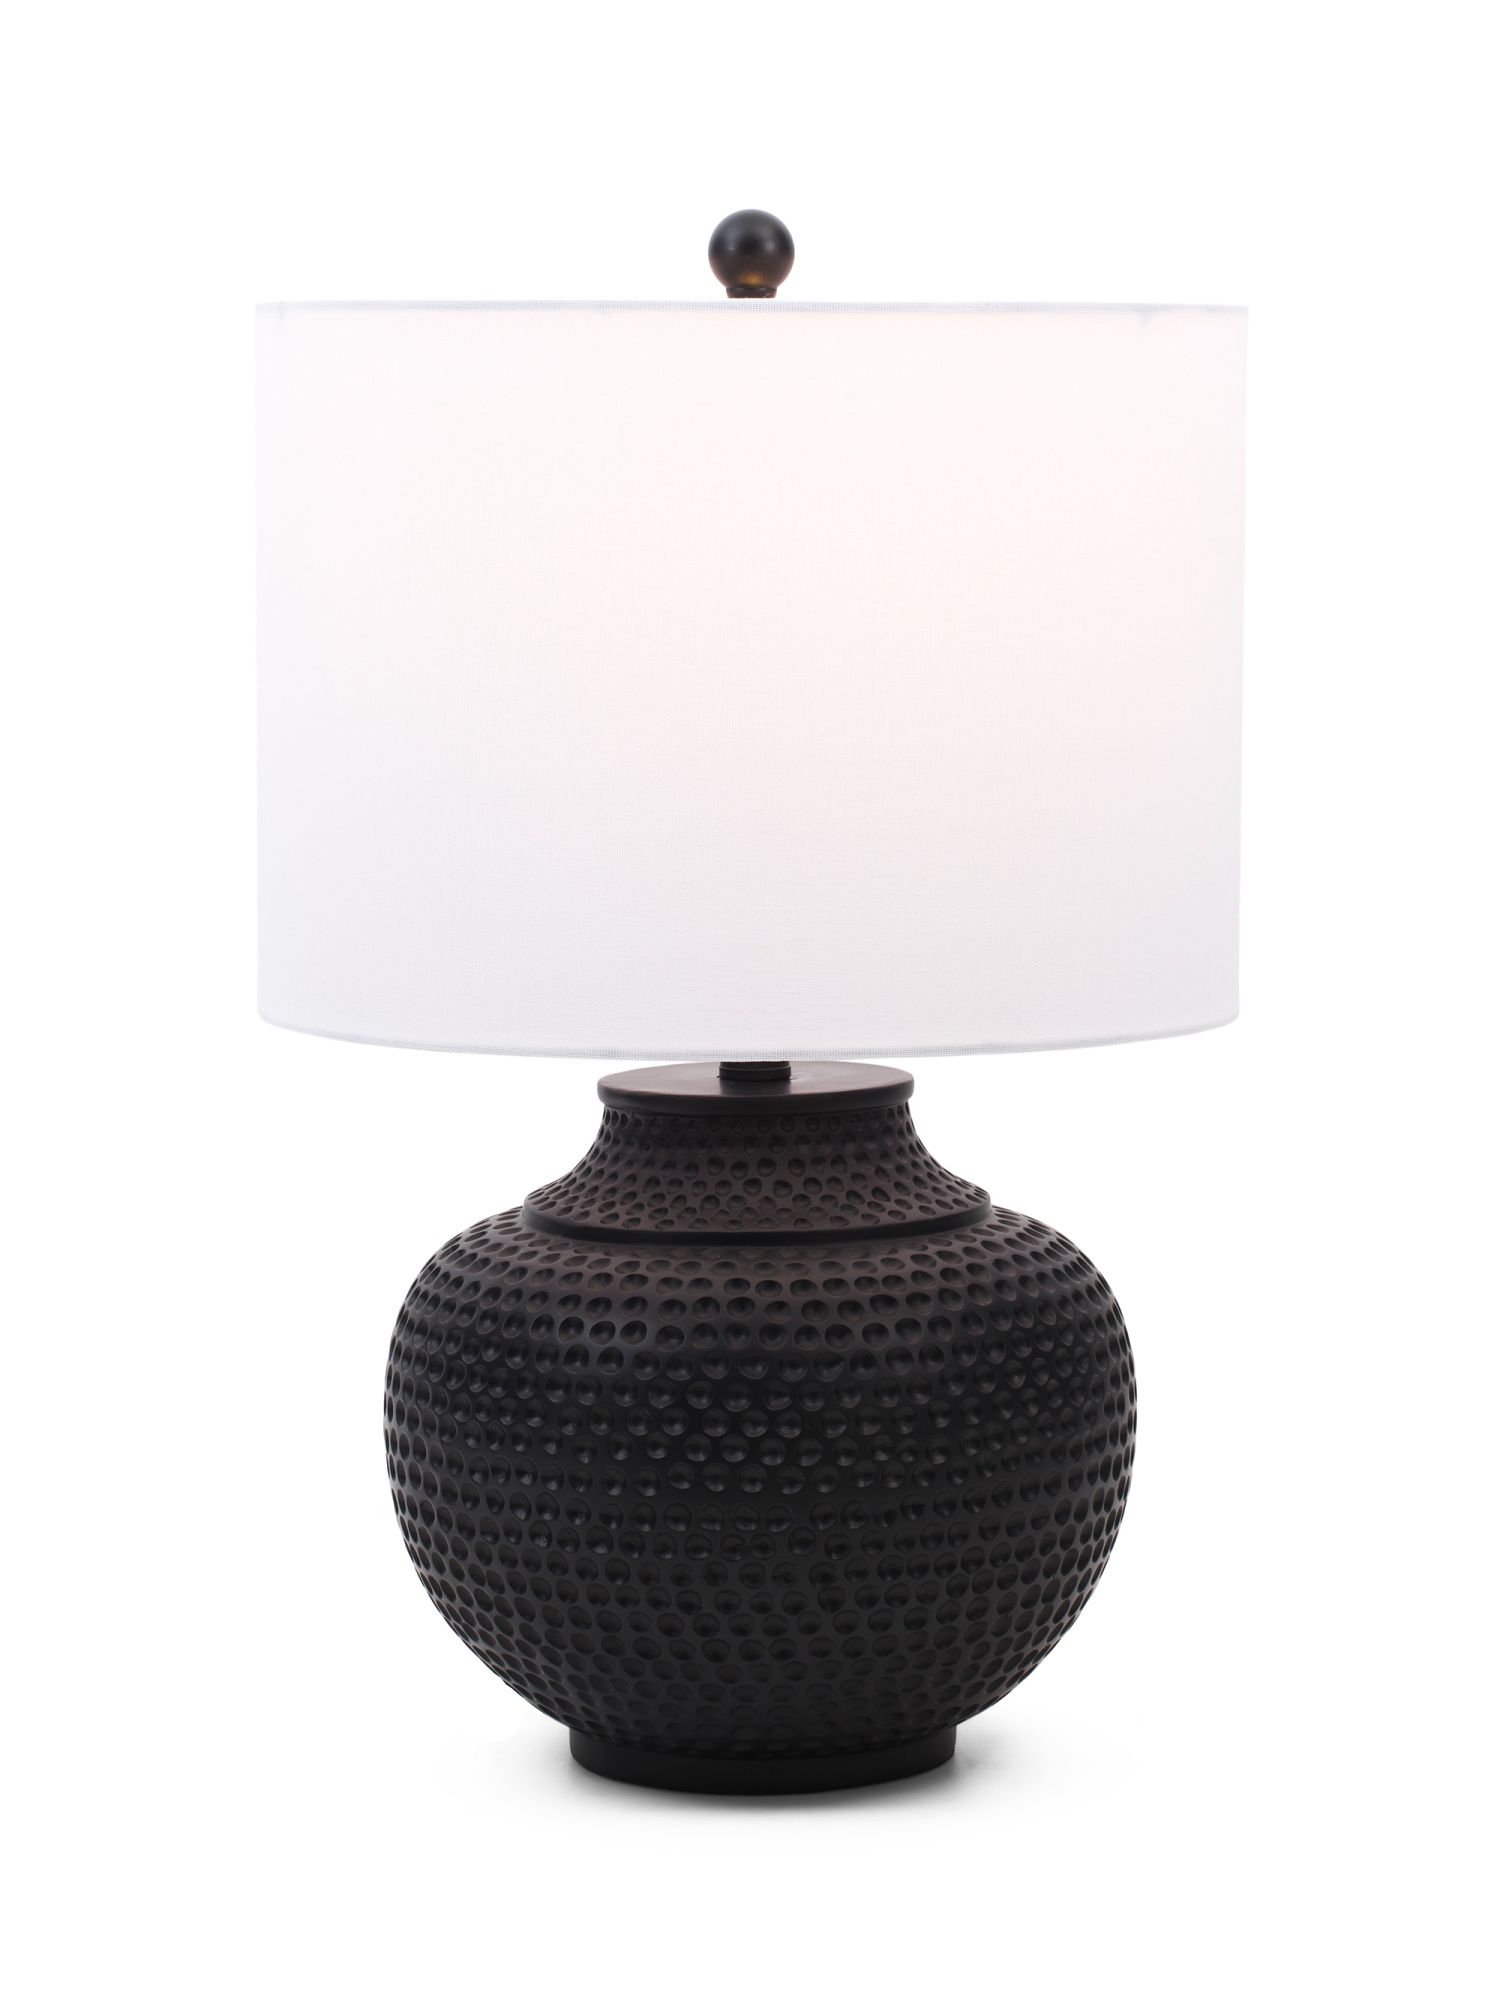 Hemper Table Lamp | Furniture & Lighting | Marshalls | Marshalls